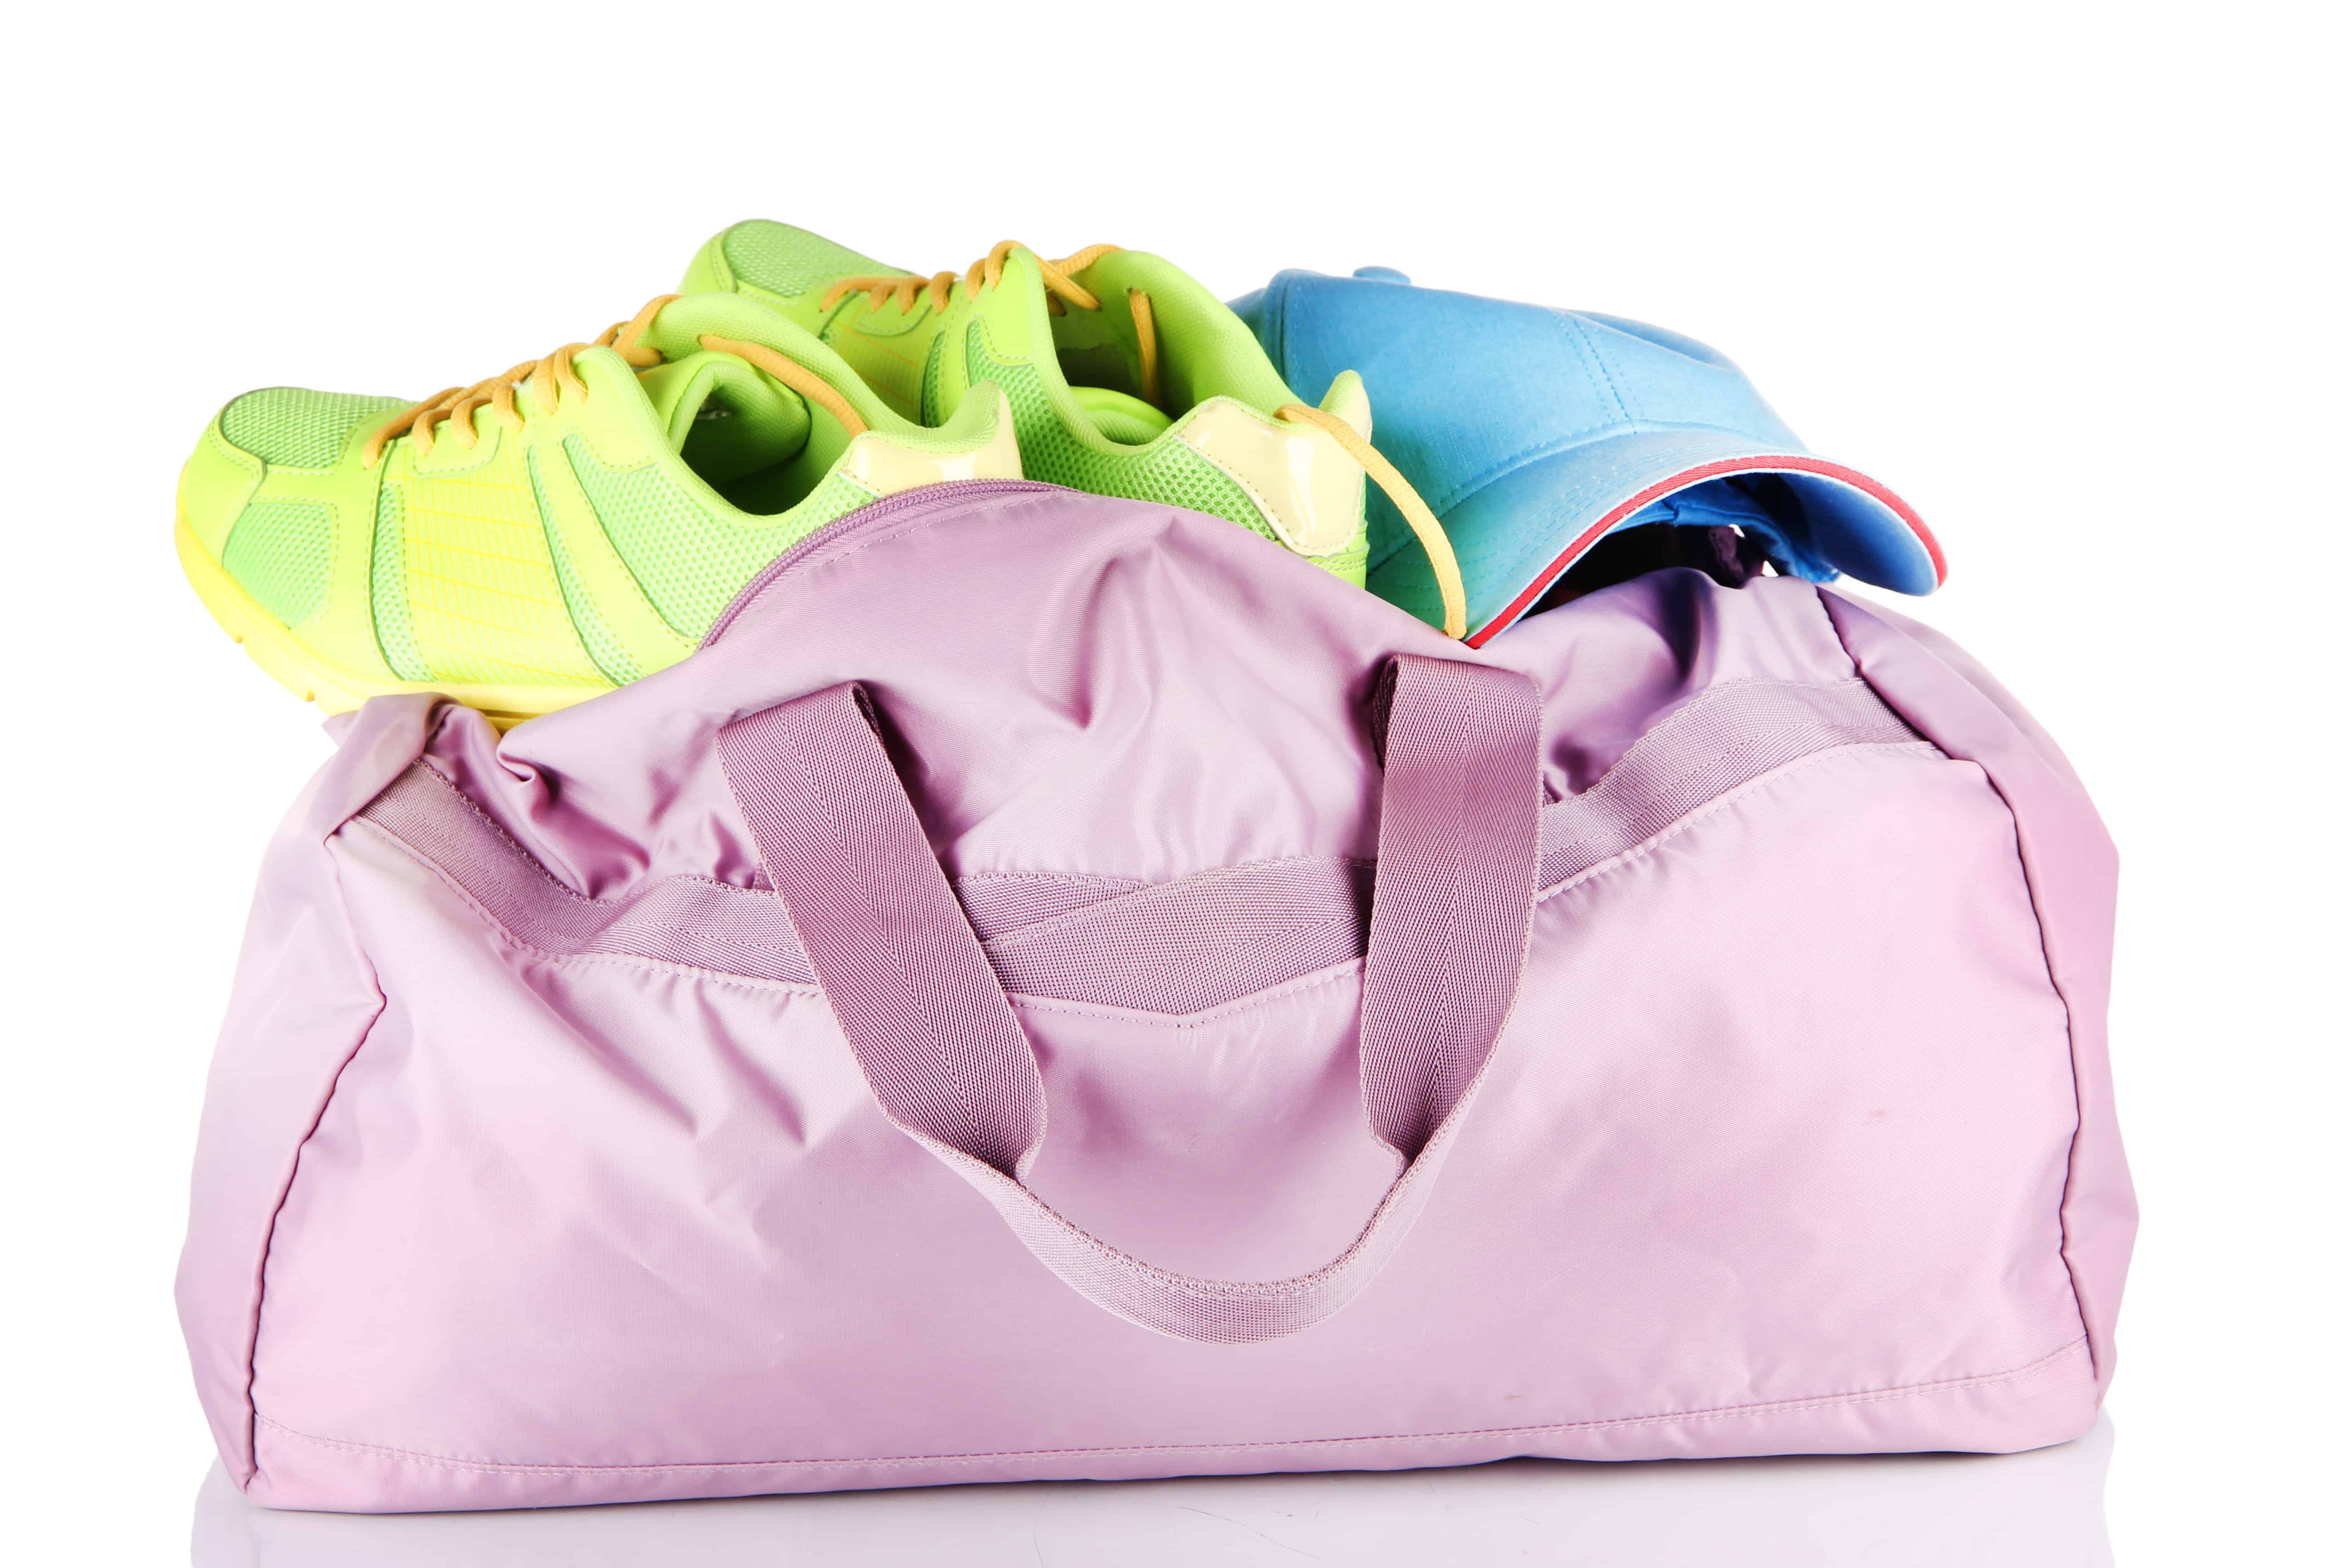 15 Best Tennis Bags in 2023 — Tennis Bags for Women